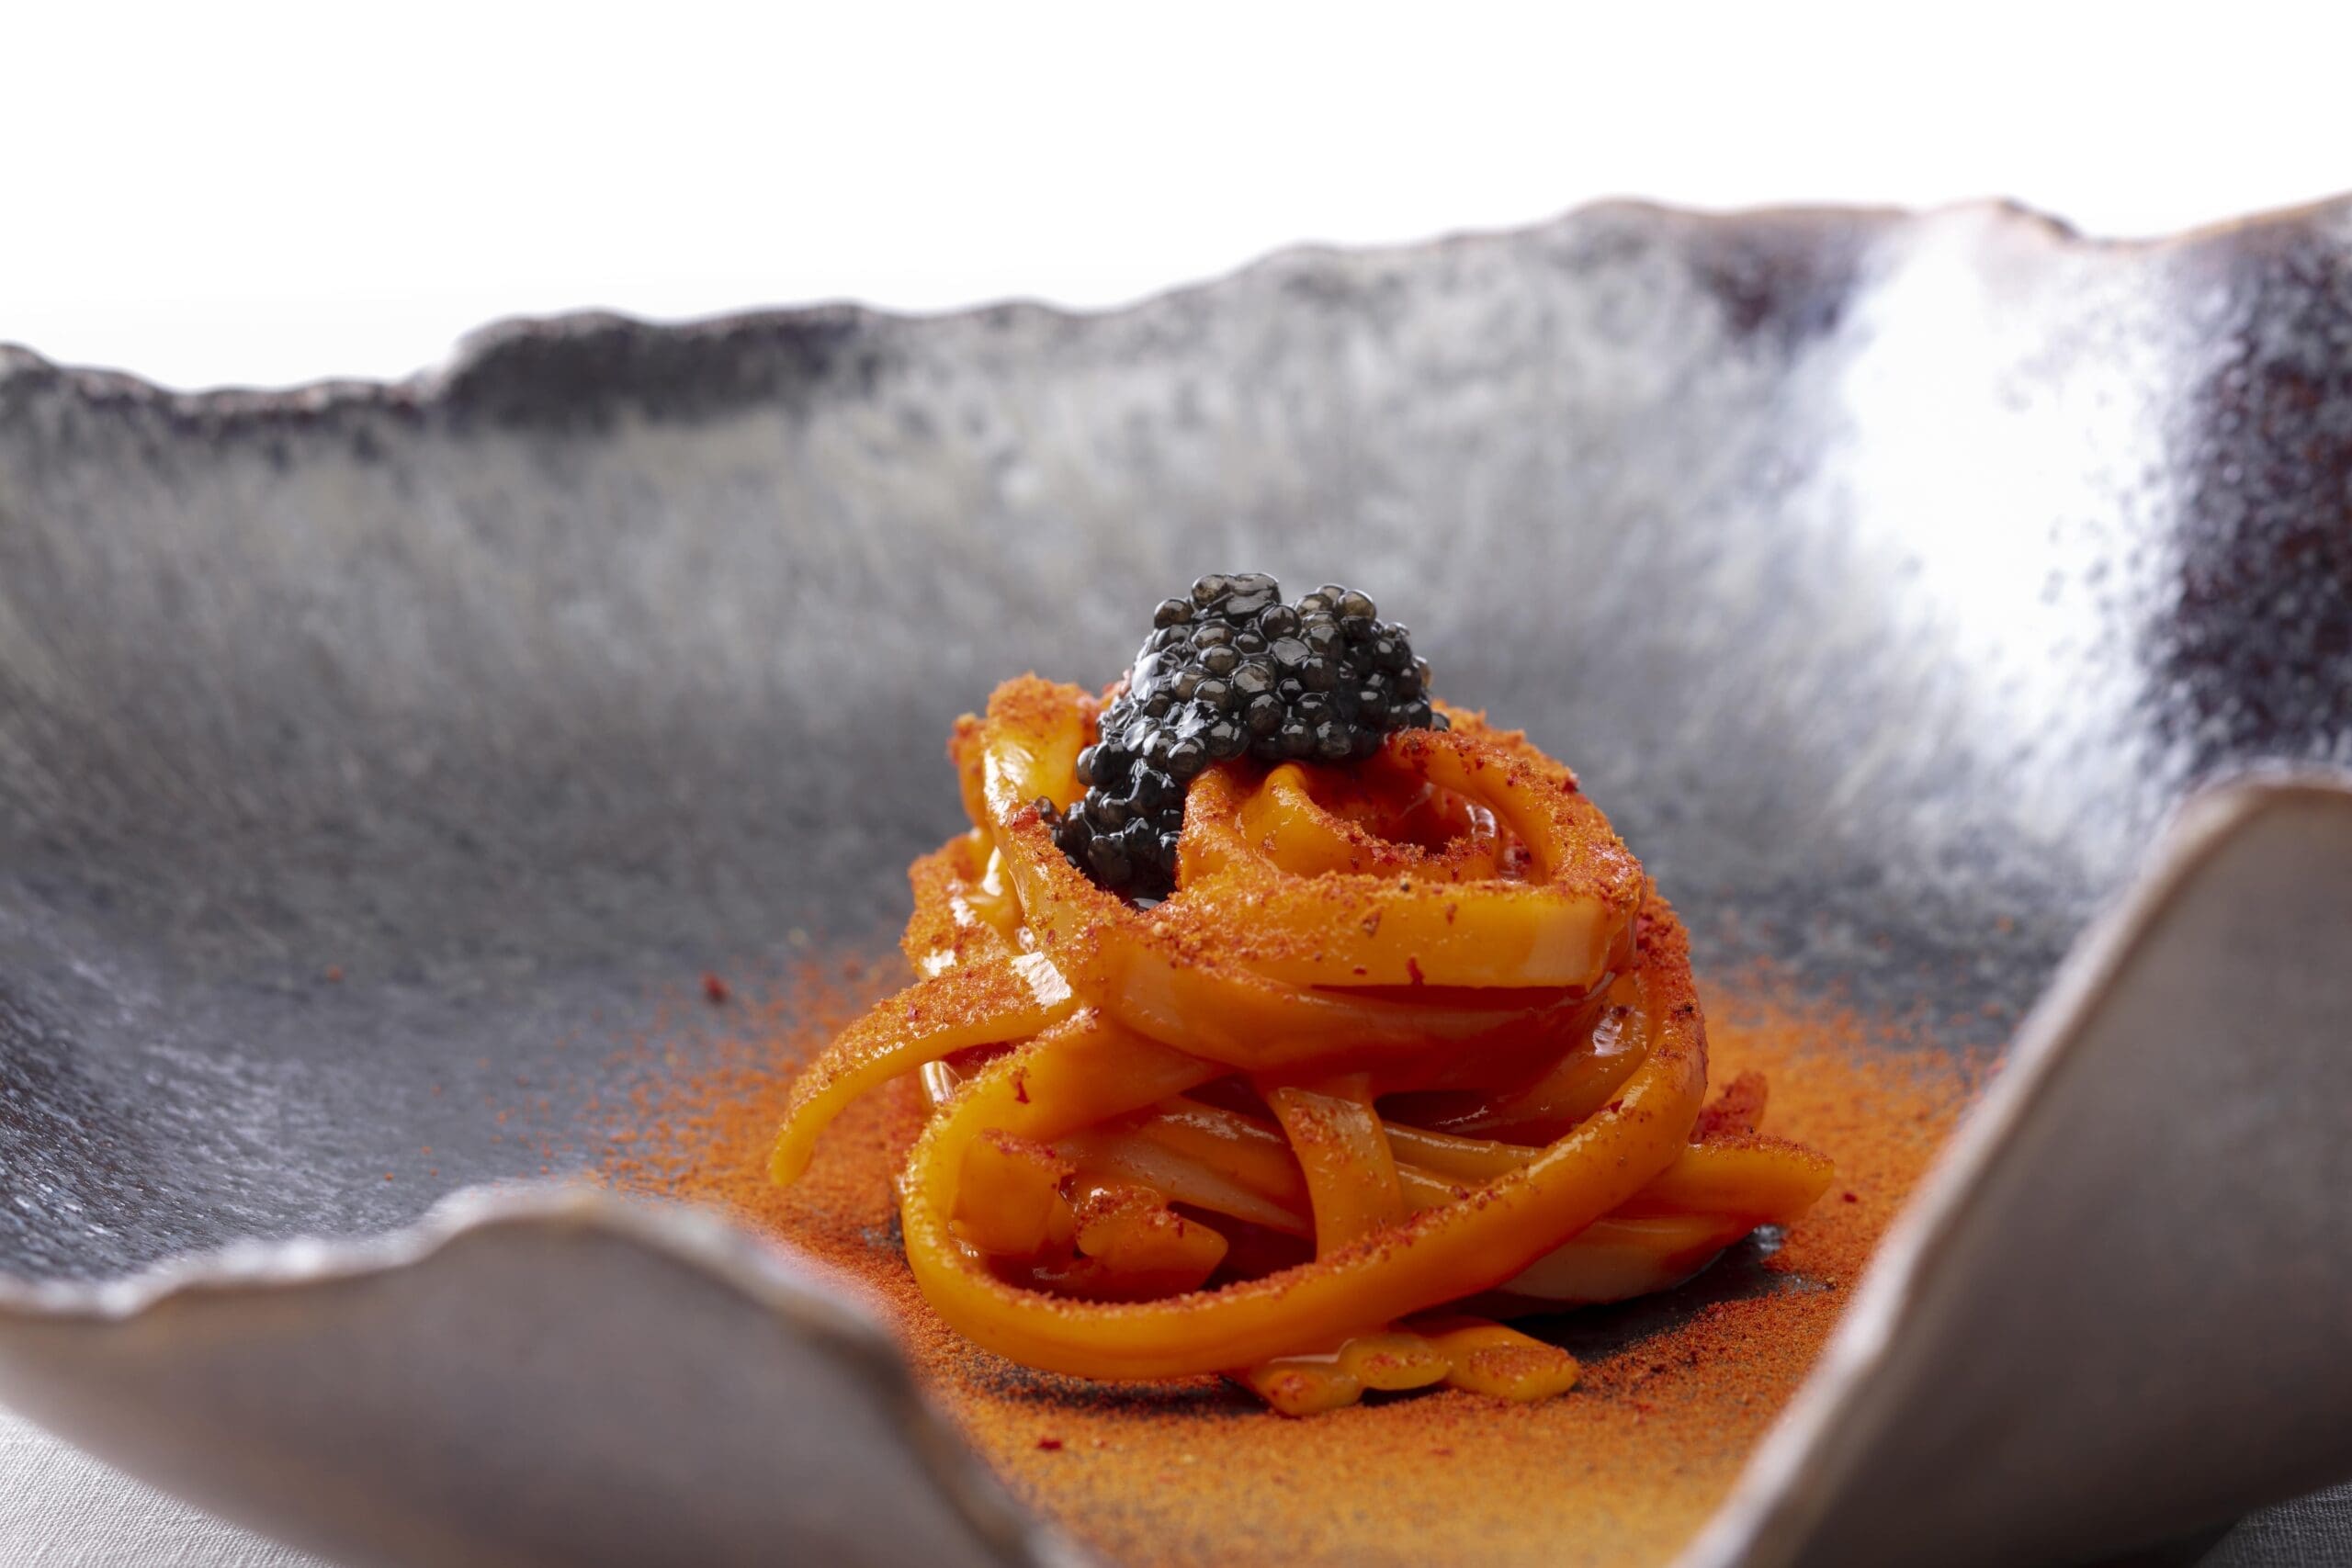 Tagliatella in red Calvisius caviar